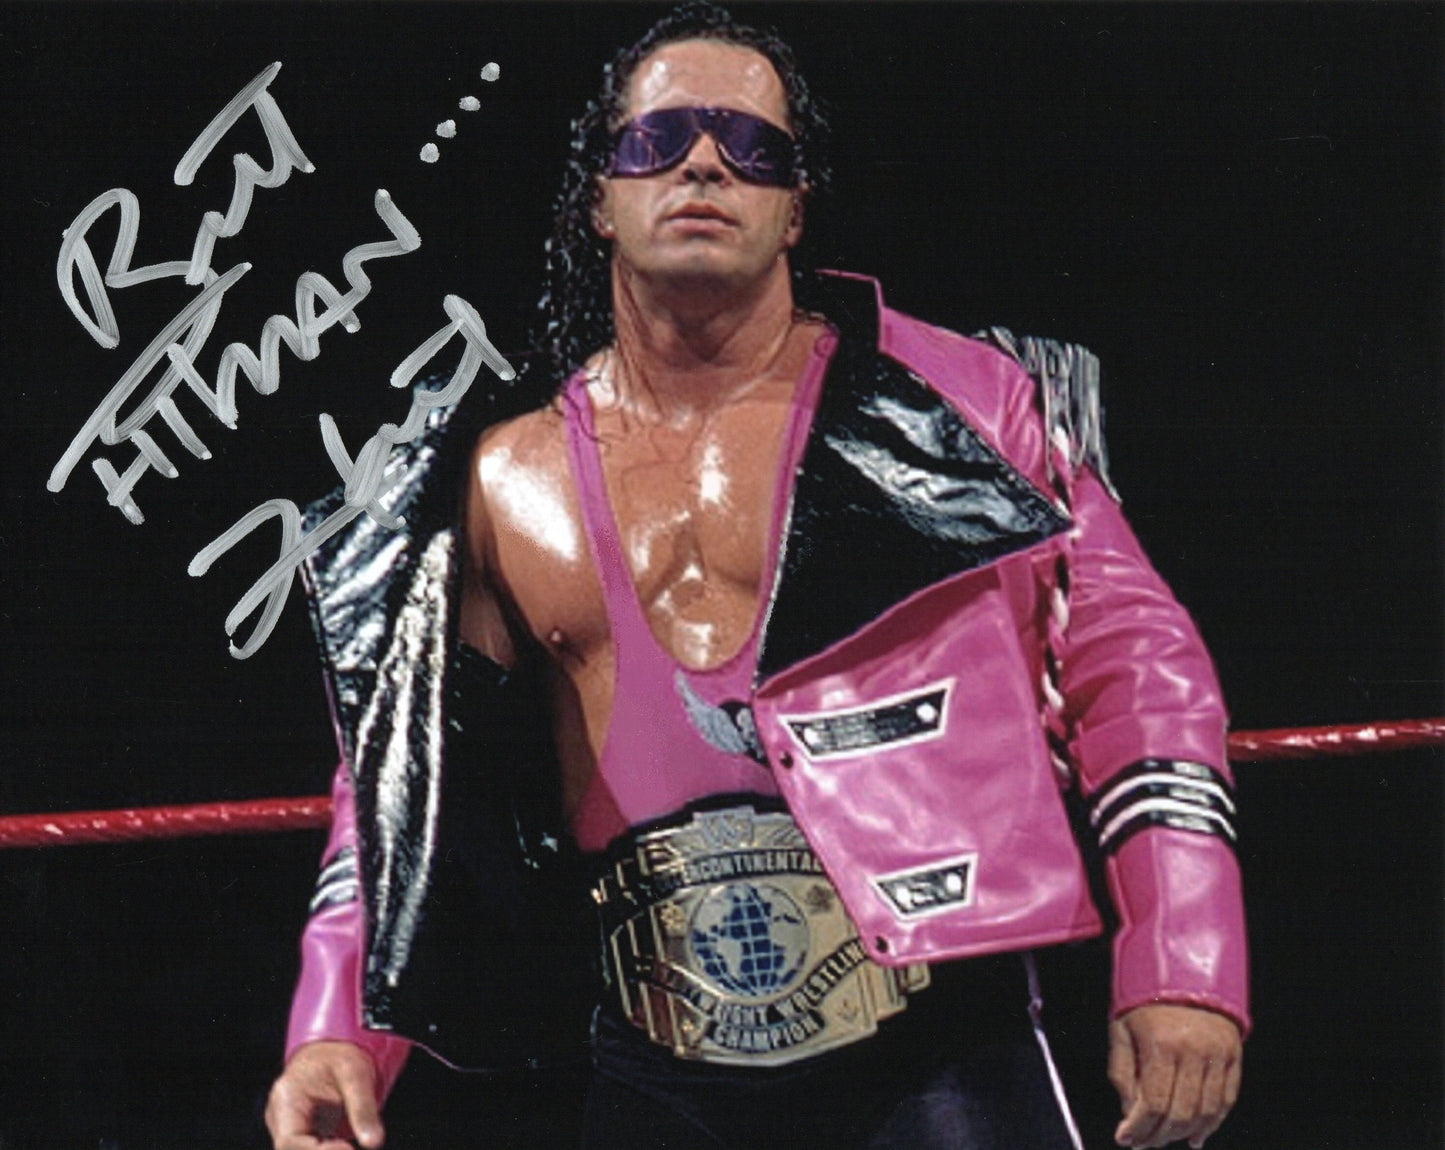 Bret "Hitman" Hart Signed WWF/WWE Wrestling Photo